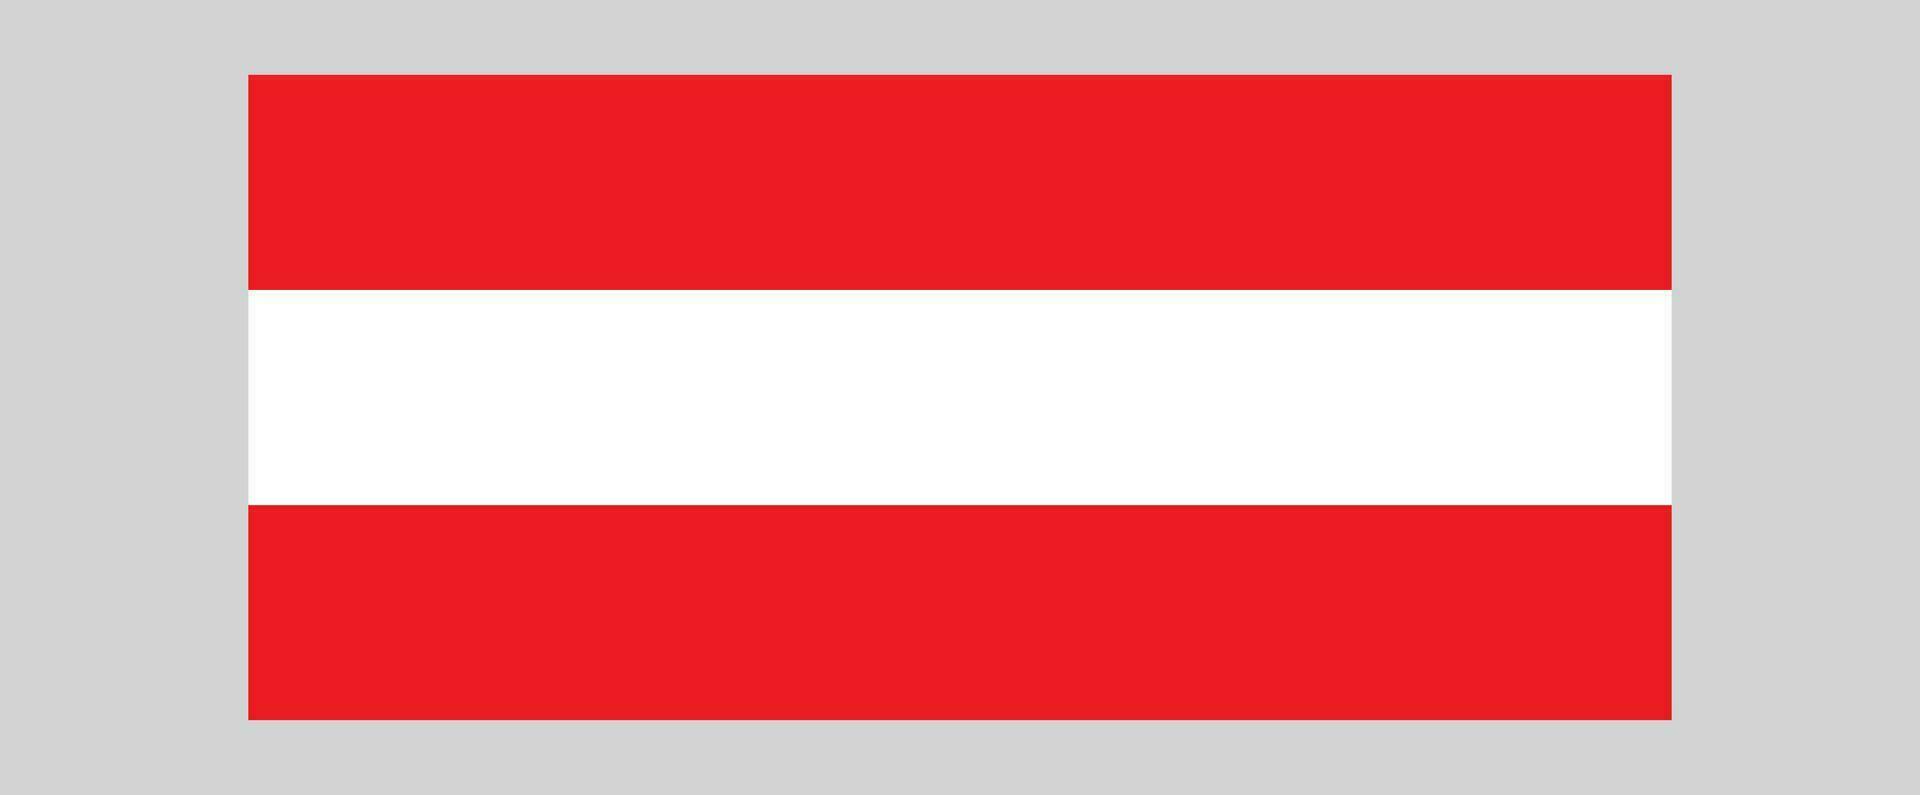 Austria Flag of illustration background design. vector